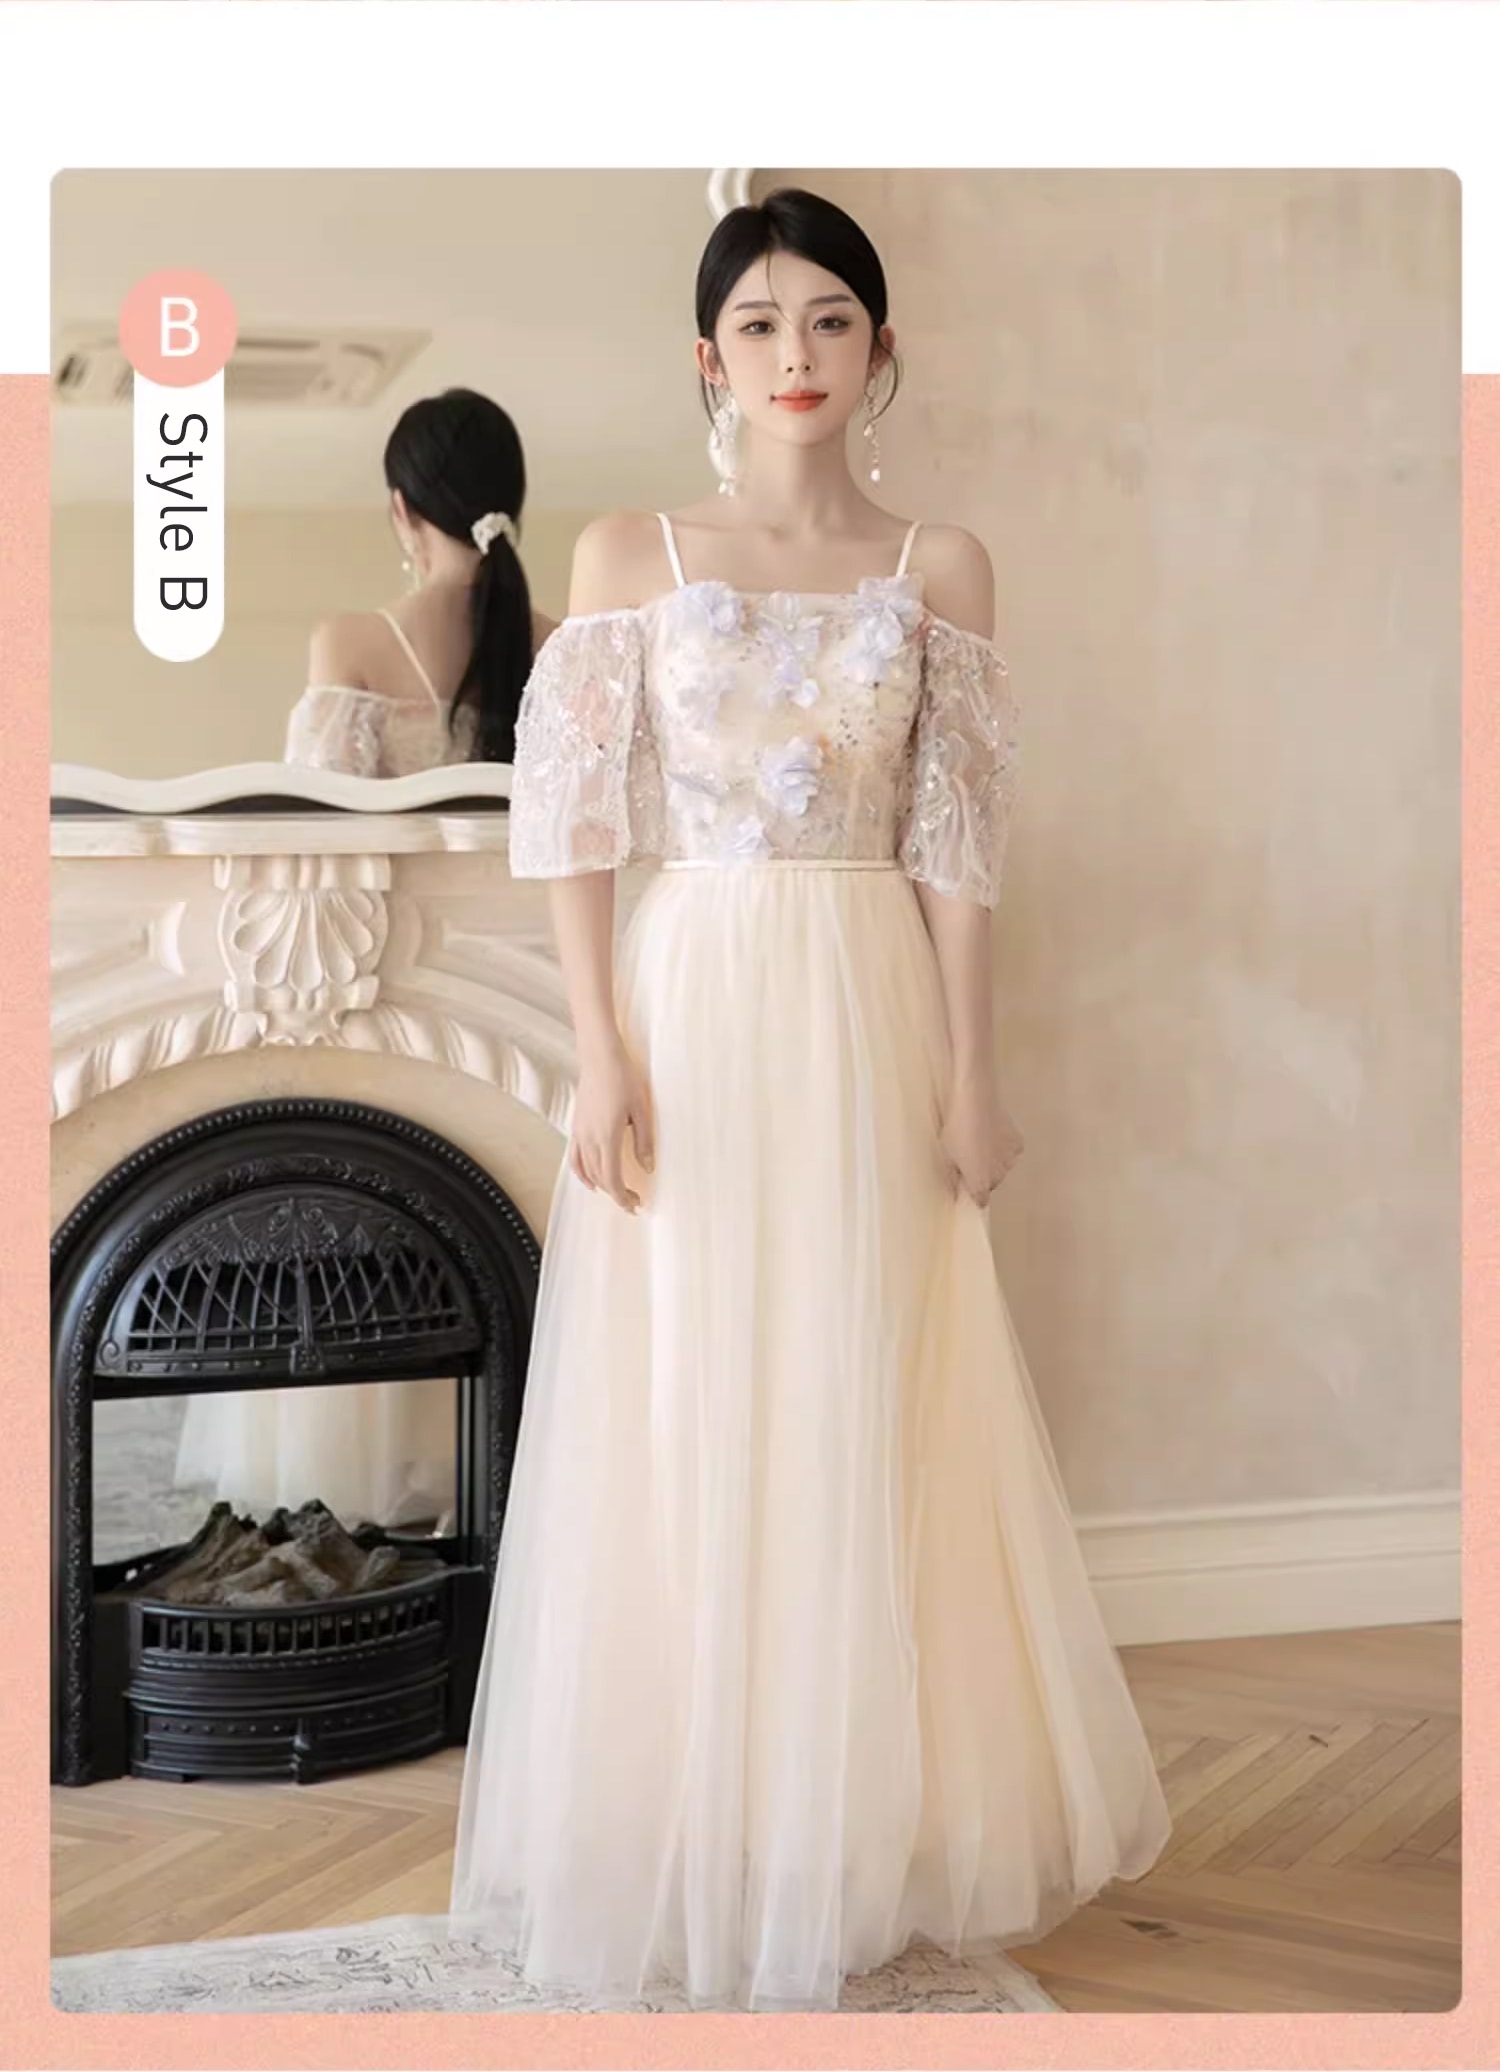 Romance-Flower-Champagne-Bridal-Party-Gown-Fashion-Bridesmaid-Dress18